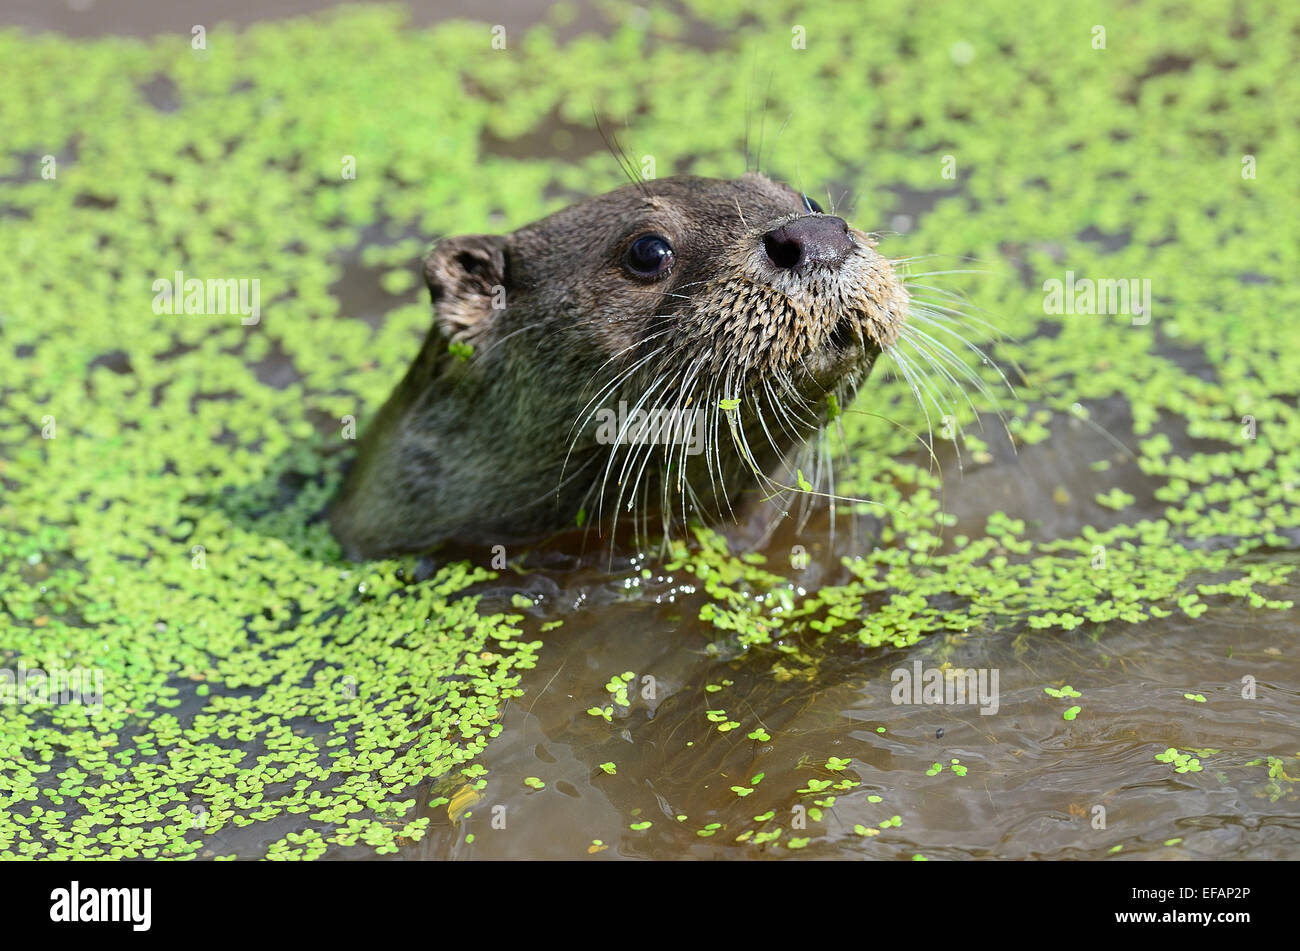 A wet otter surrounded by duckweed UK Stock Photo